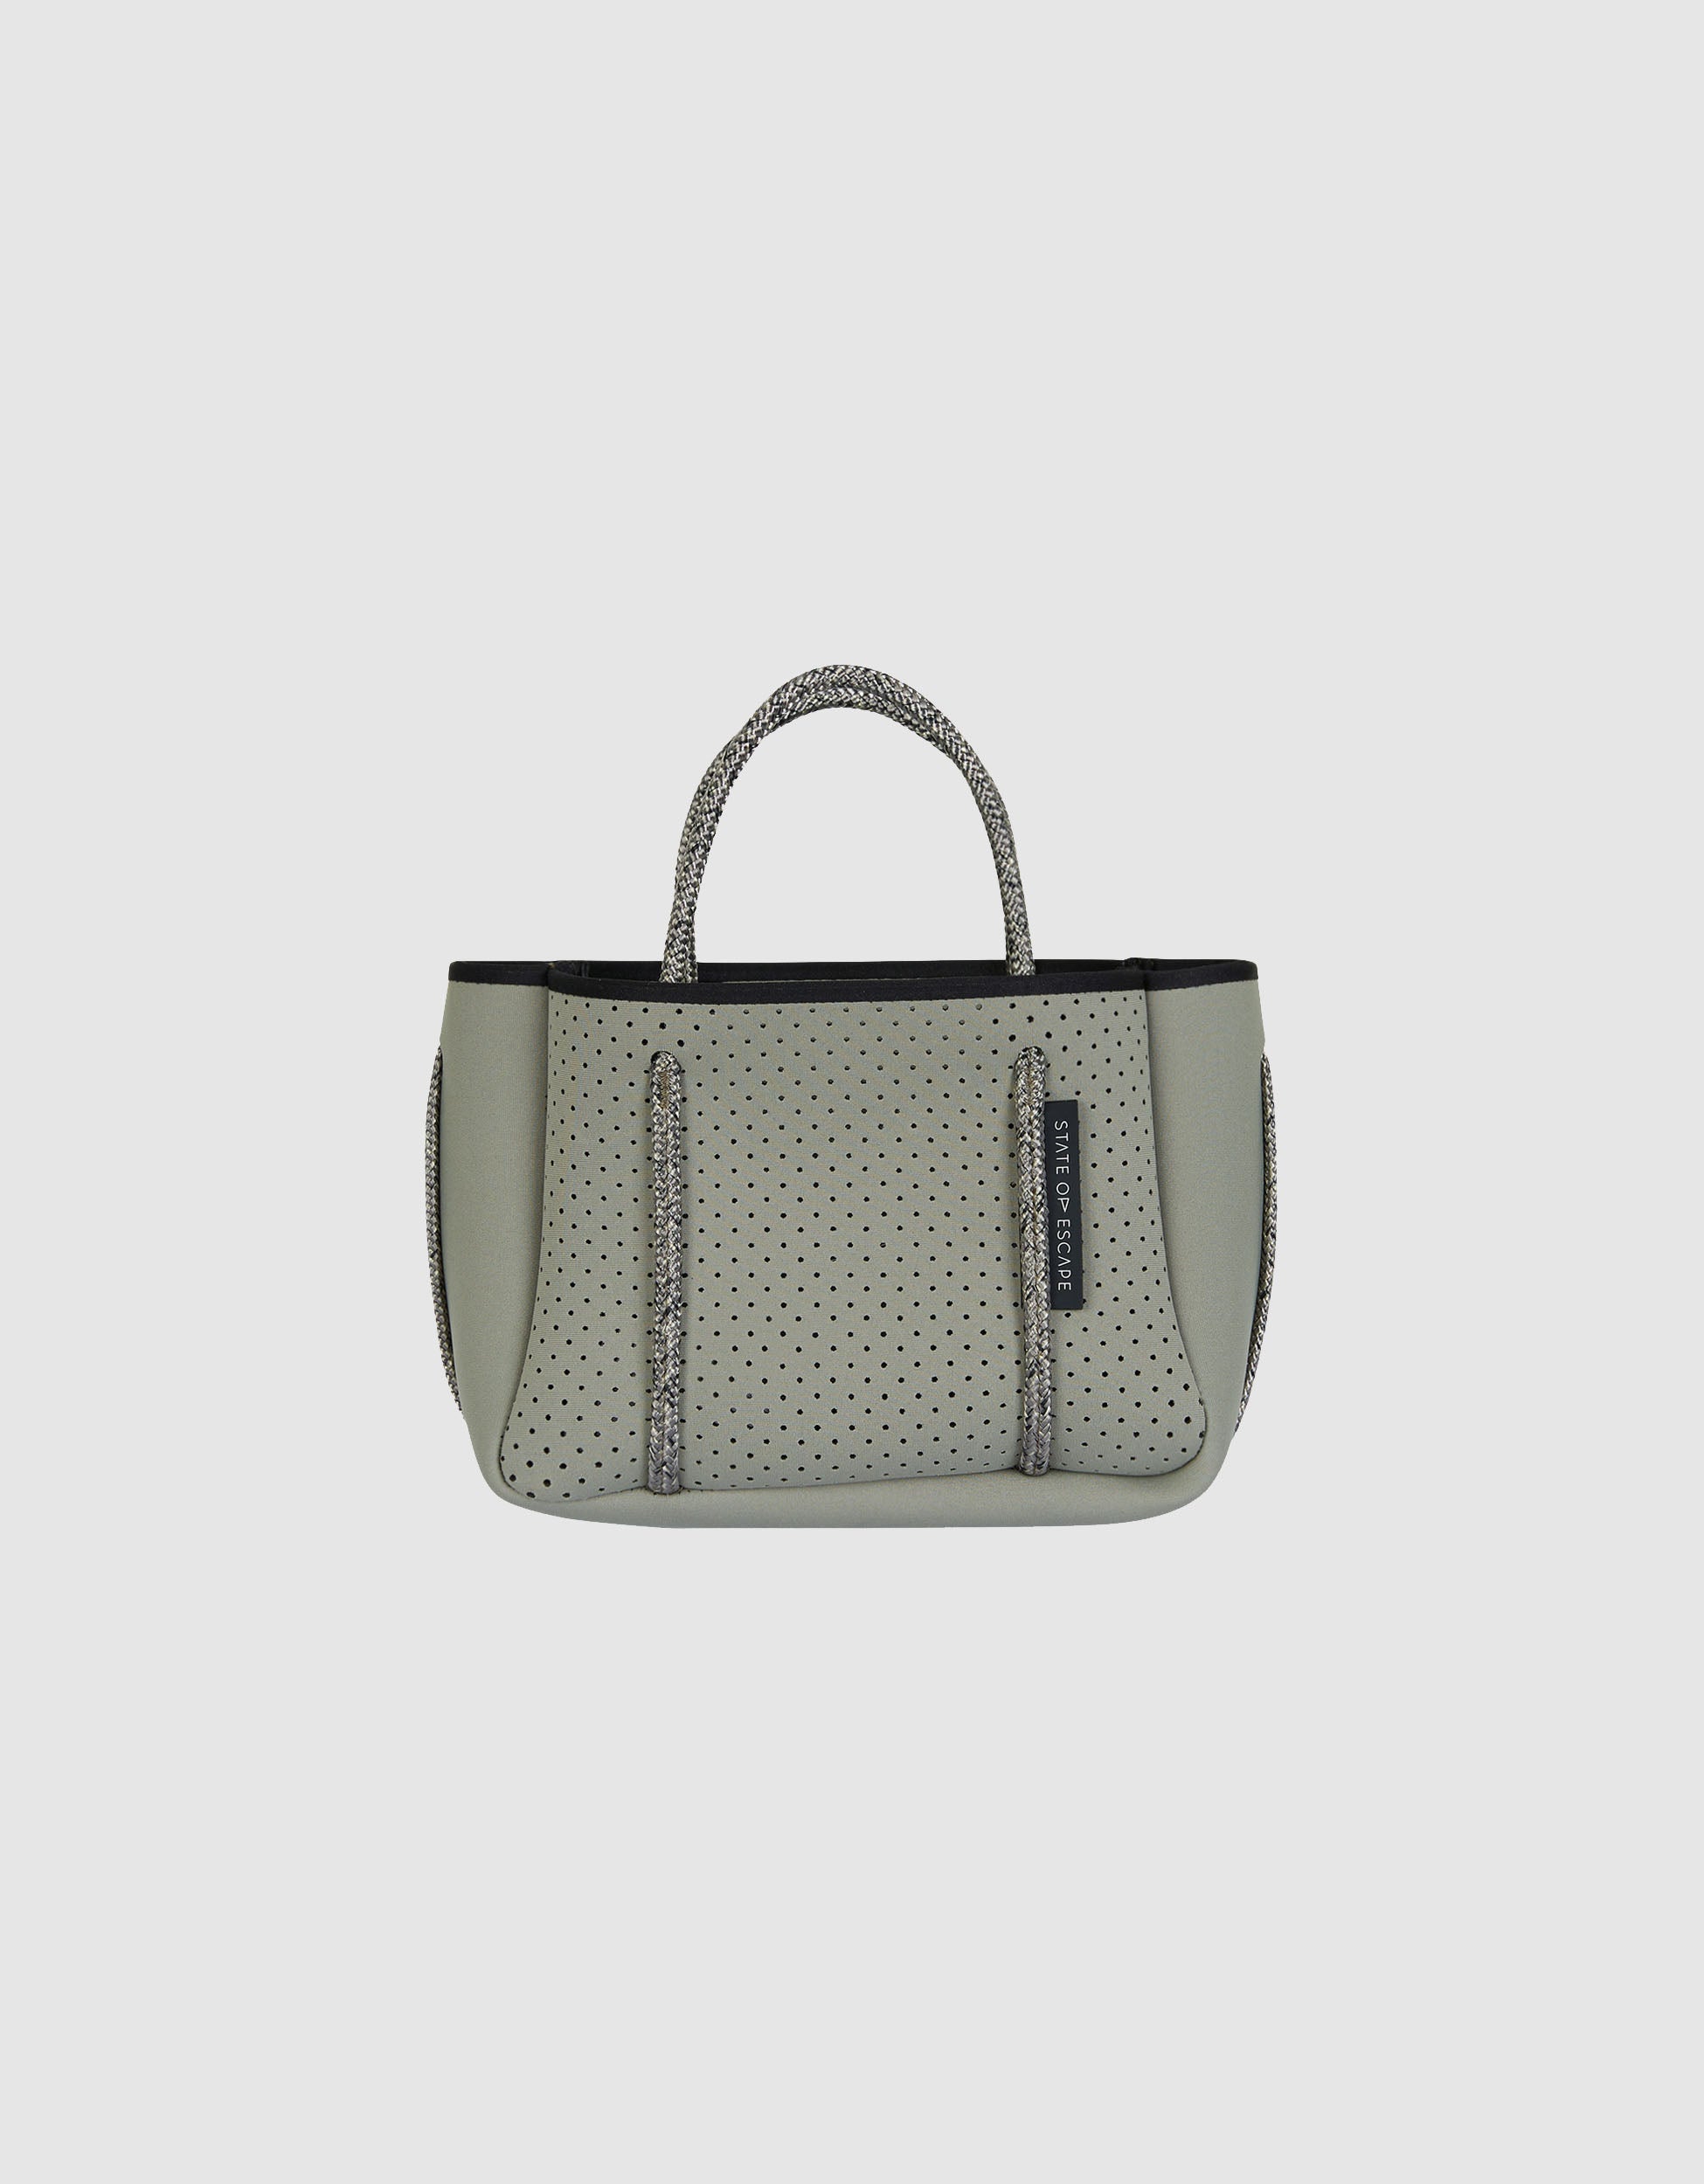 Australian Designer Tote Bags | Small Tote Bags | Micro Collection 